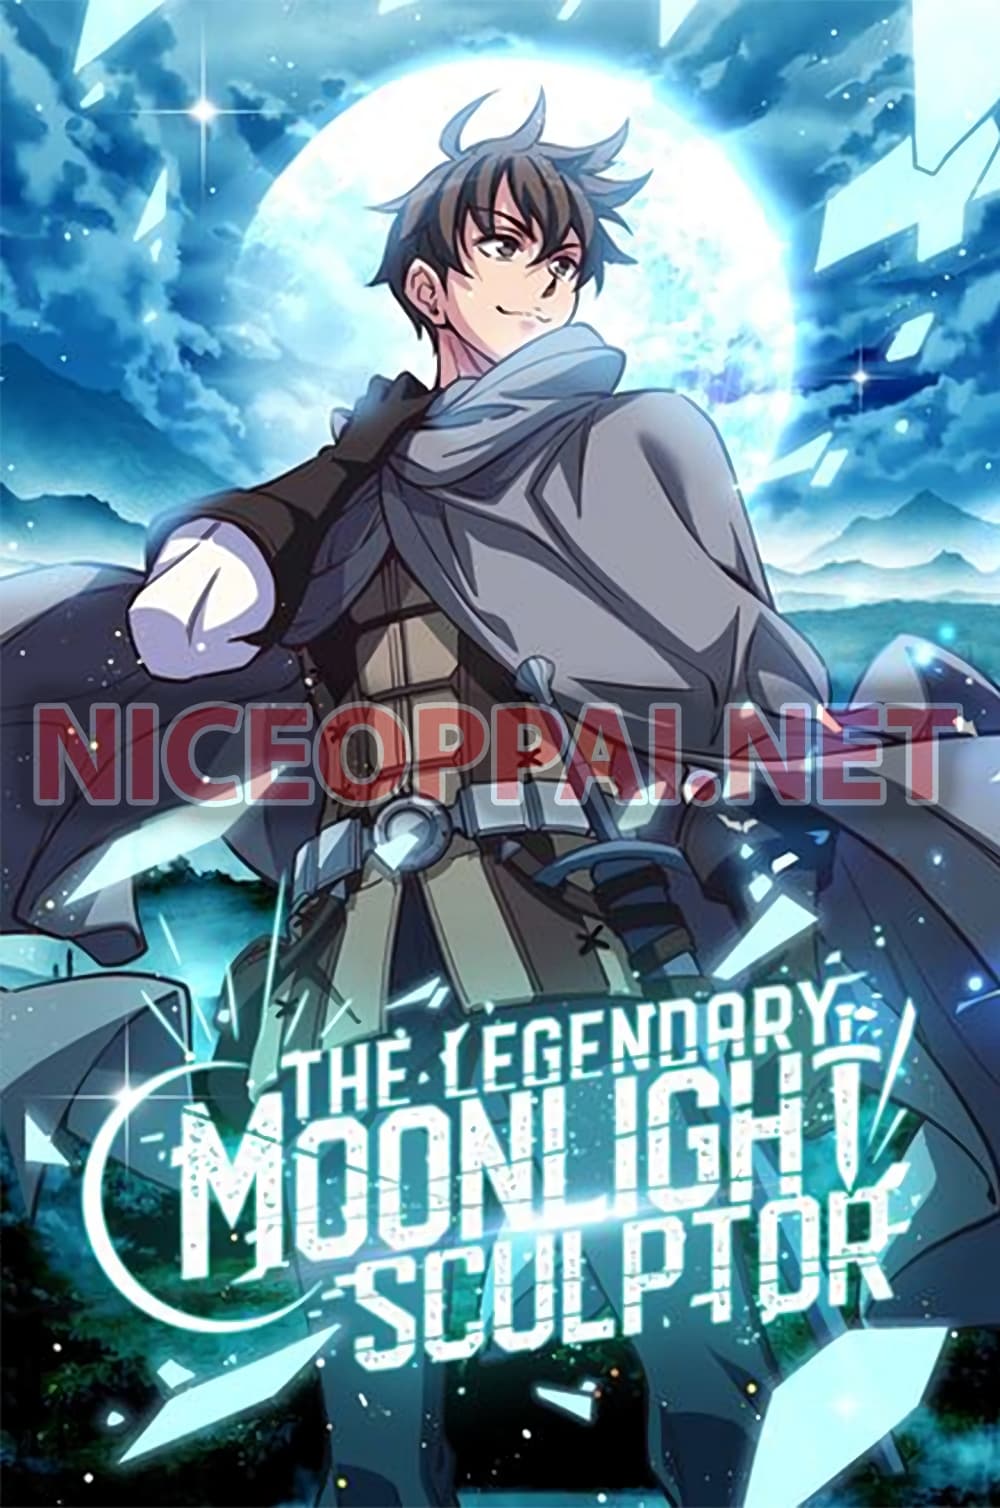 Legendary Moonlight Sculptor ประติมากรแสงจันทร์ในตำนาน 167-167